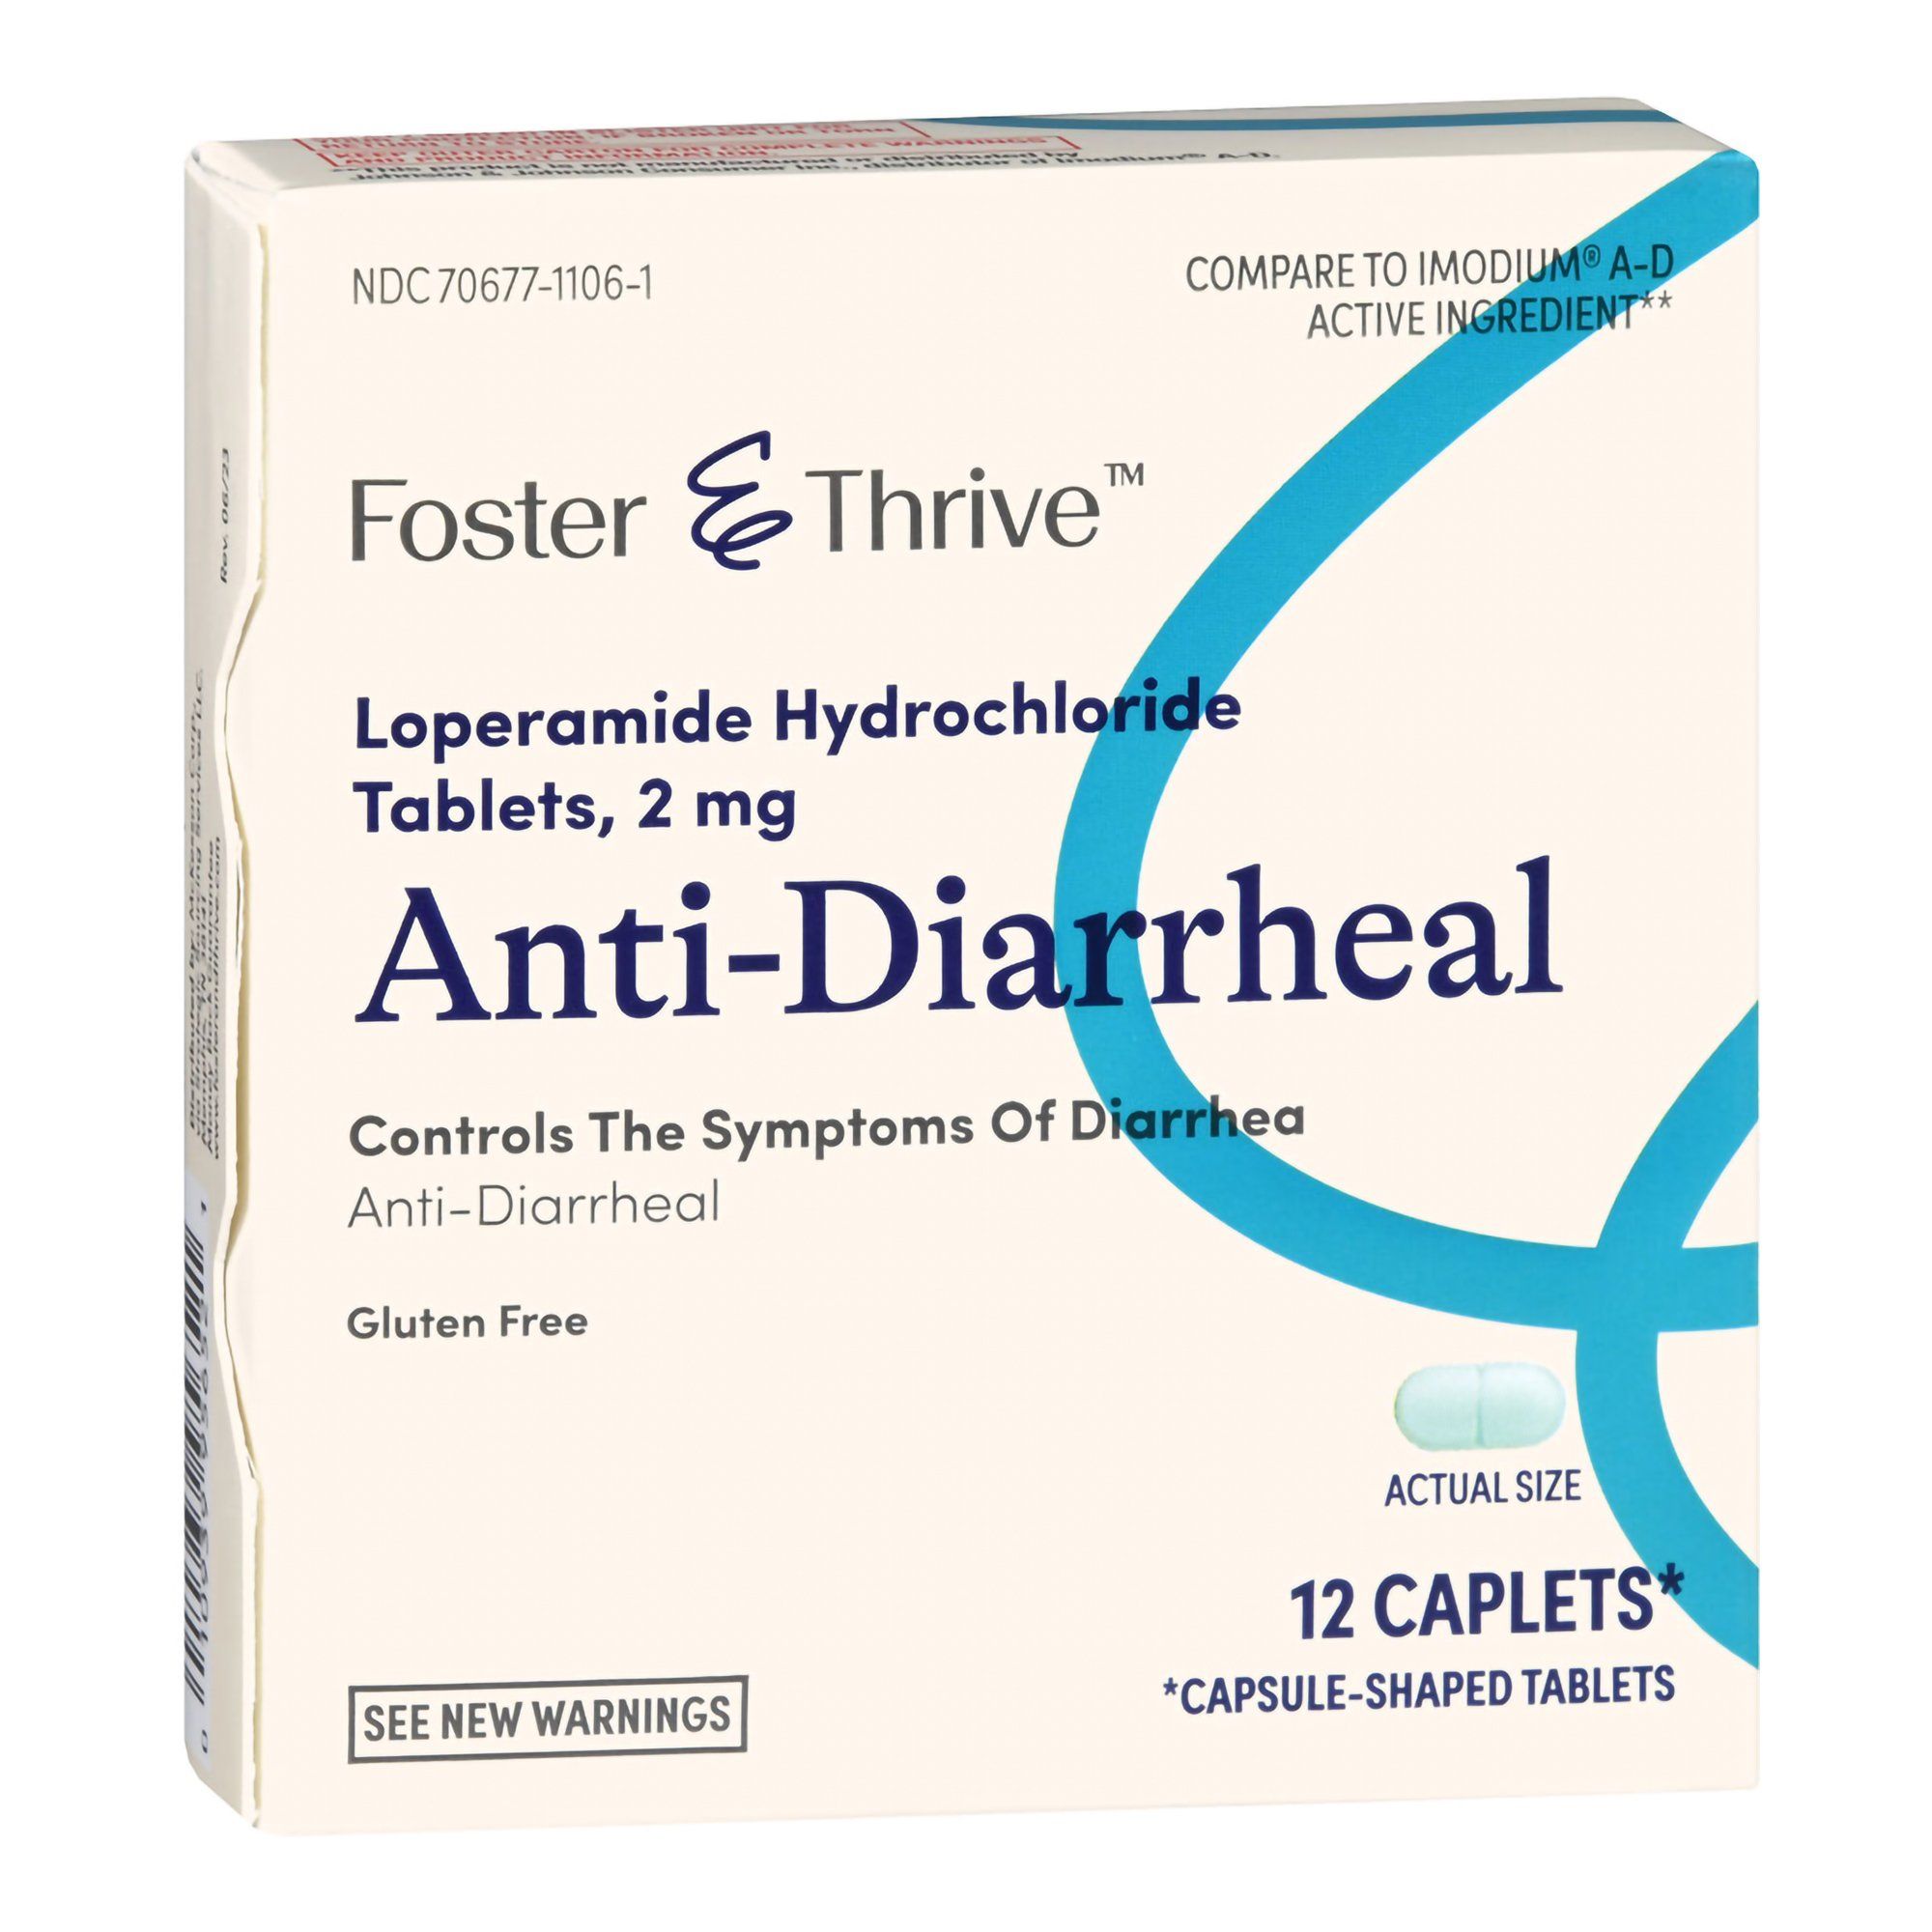 Foster & Thrive Anti-Diarrheal Loperamide HCl Caplets, 2 mg - 12 ct